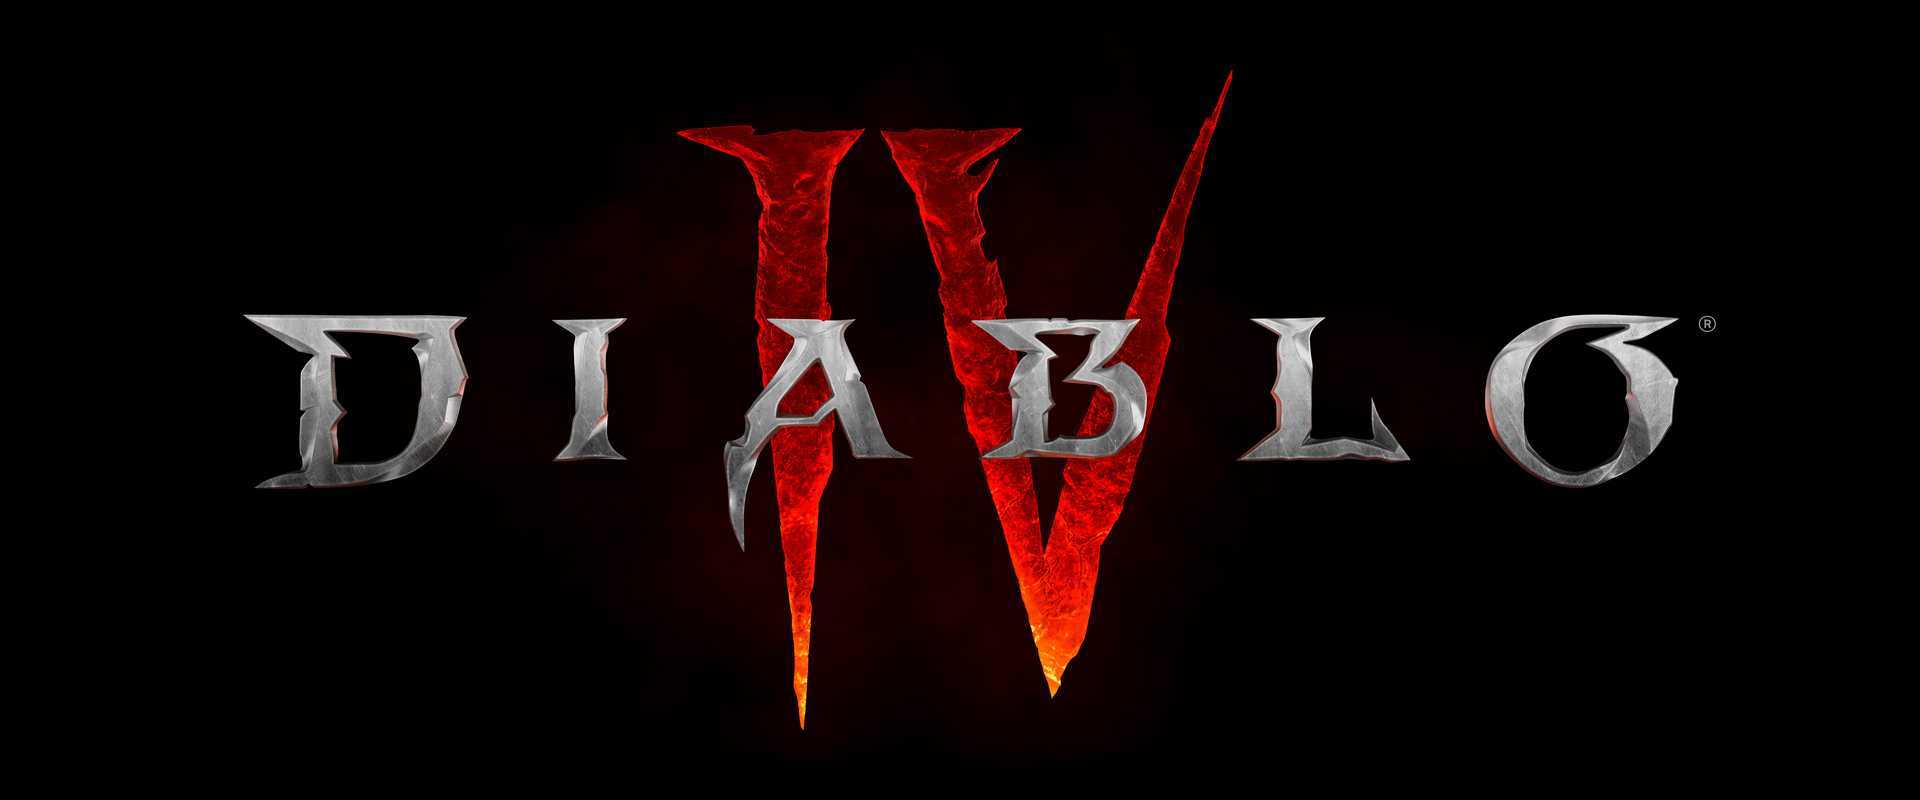 1-Diablo_IV_Logo.jpg